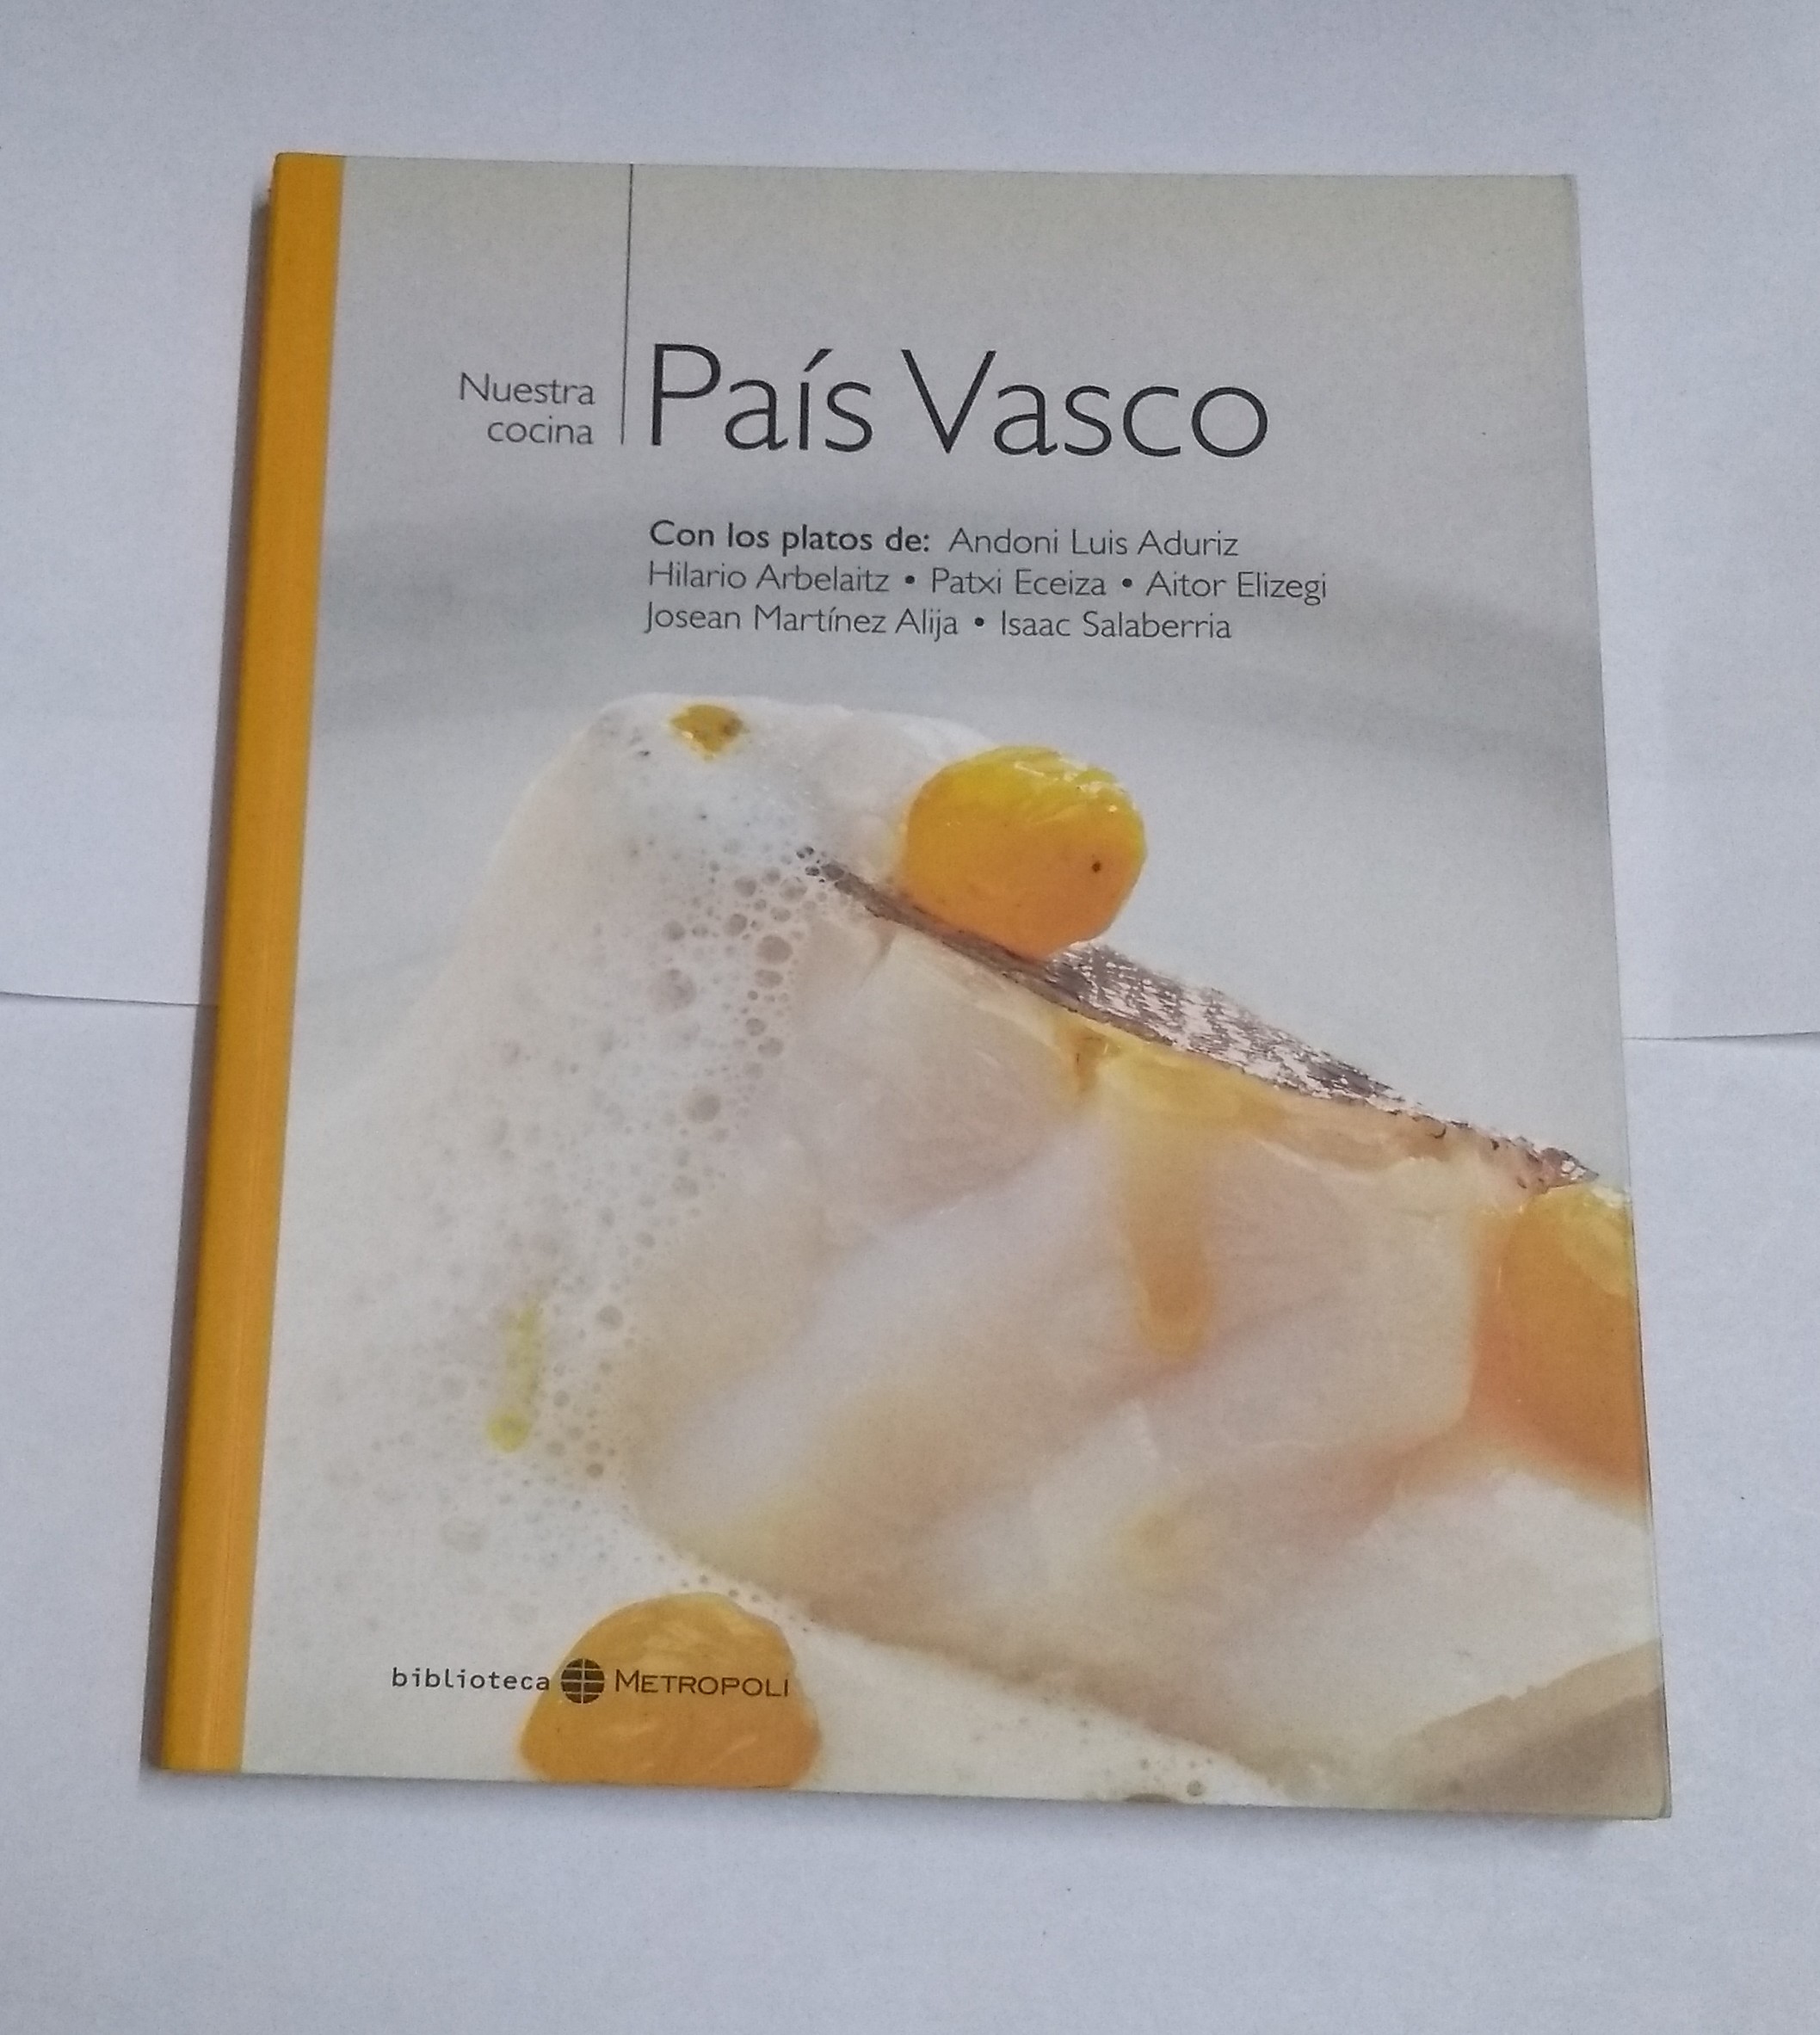 Nuestra cocina: País Vasco